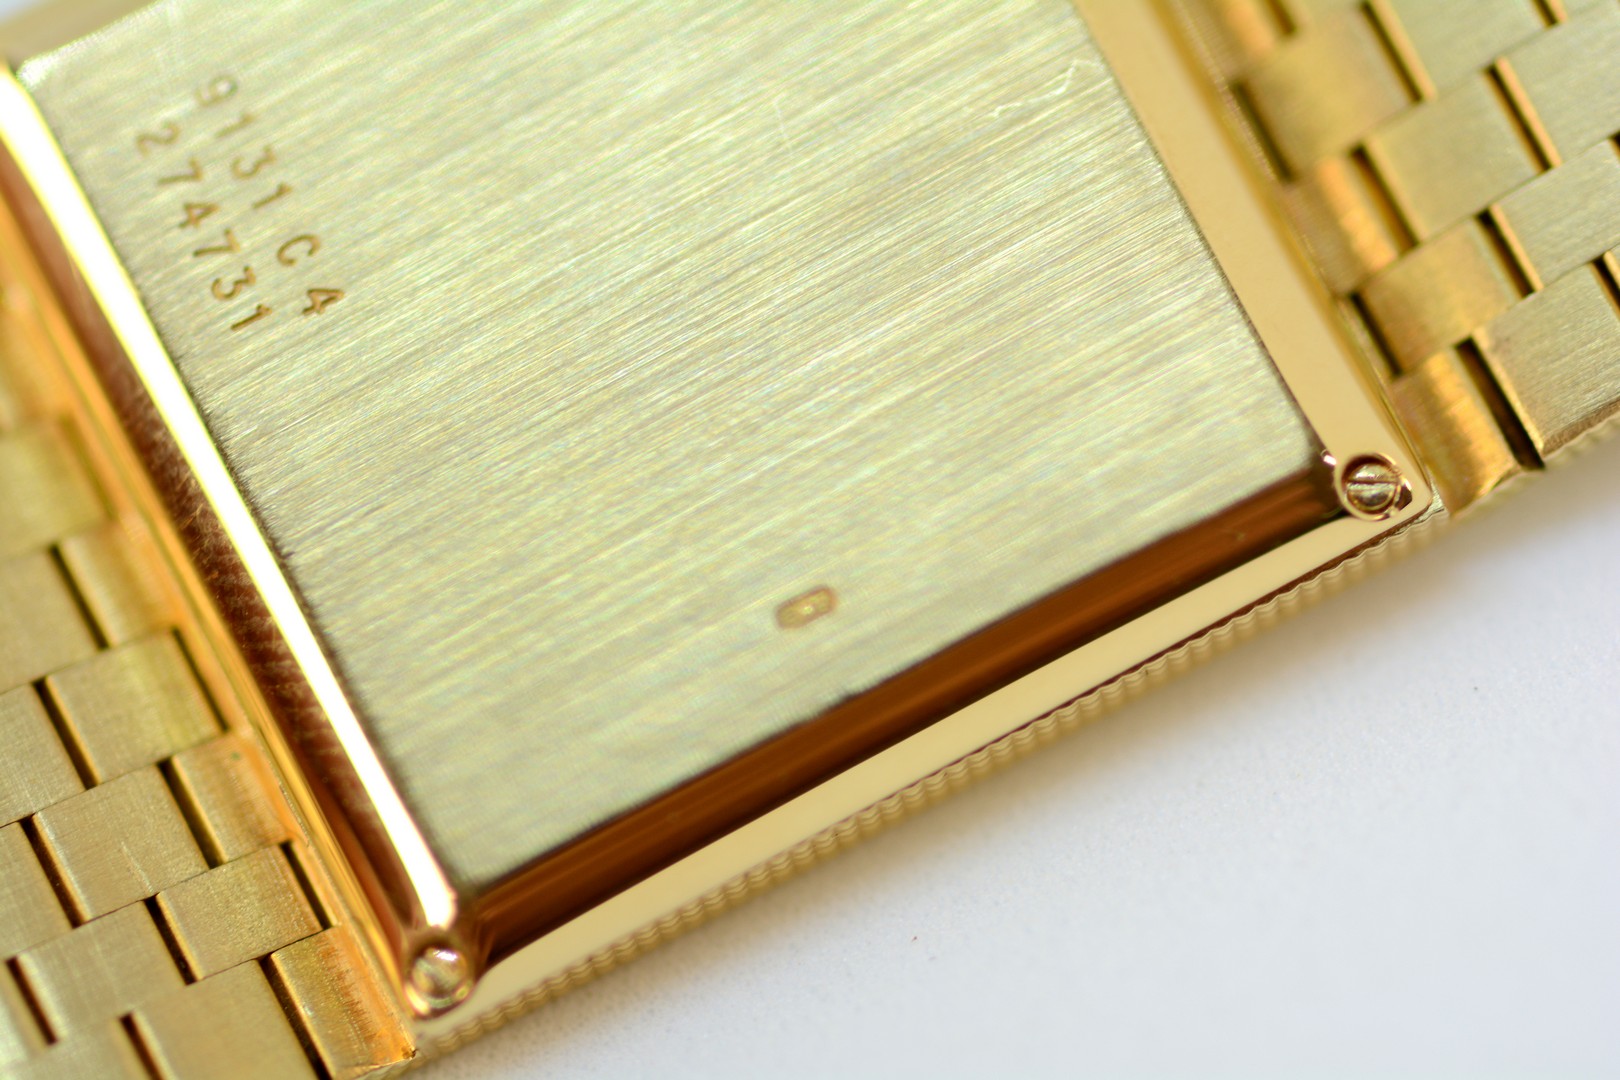 Piaget / 9131 C 4 - Lady's Yellow Gold Wristwatch - Image 10 of 10